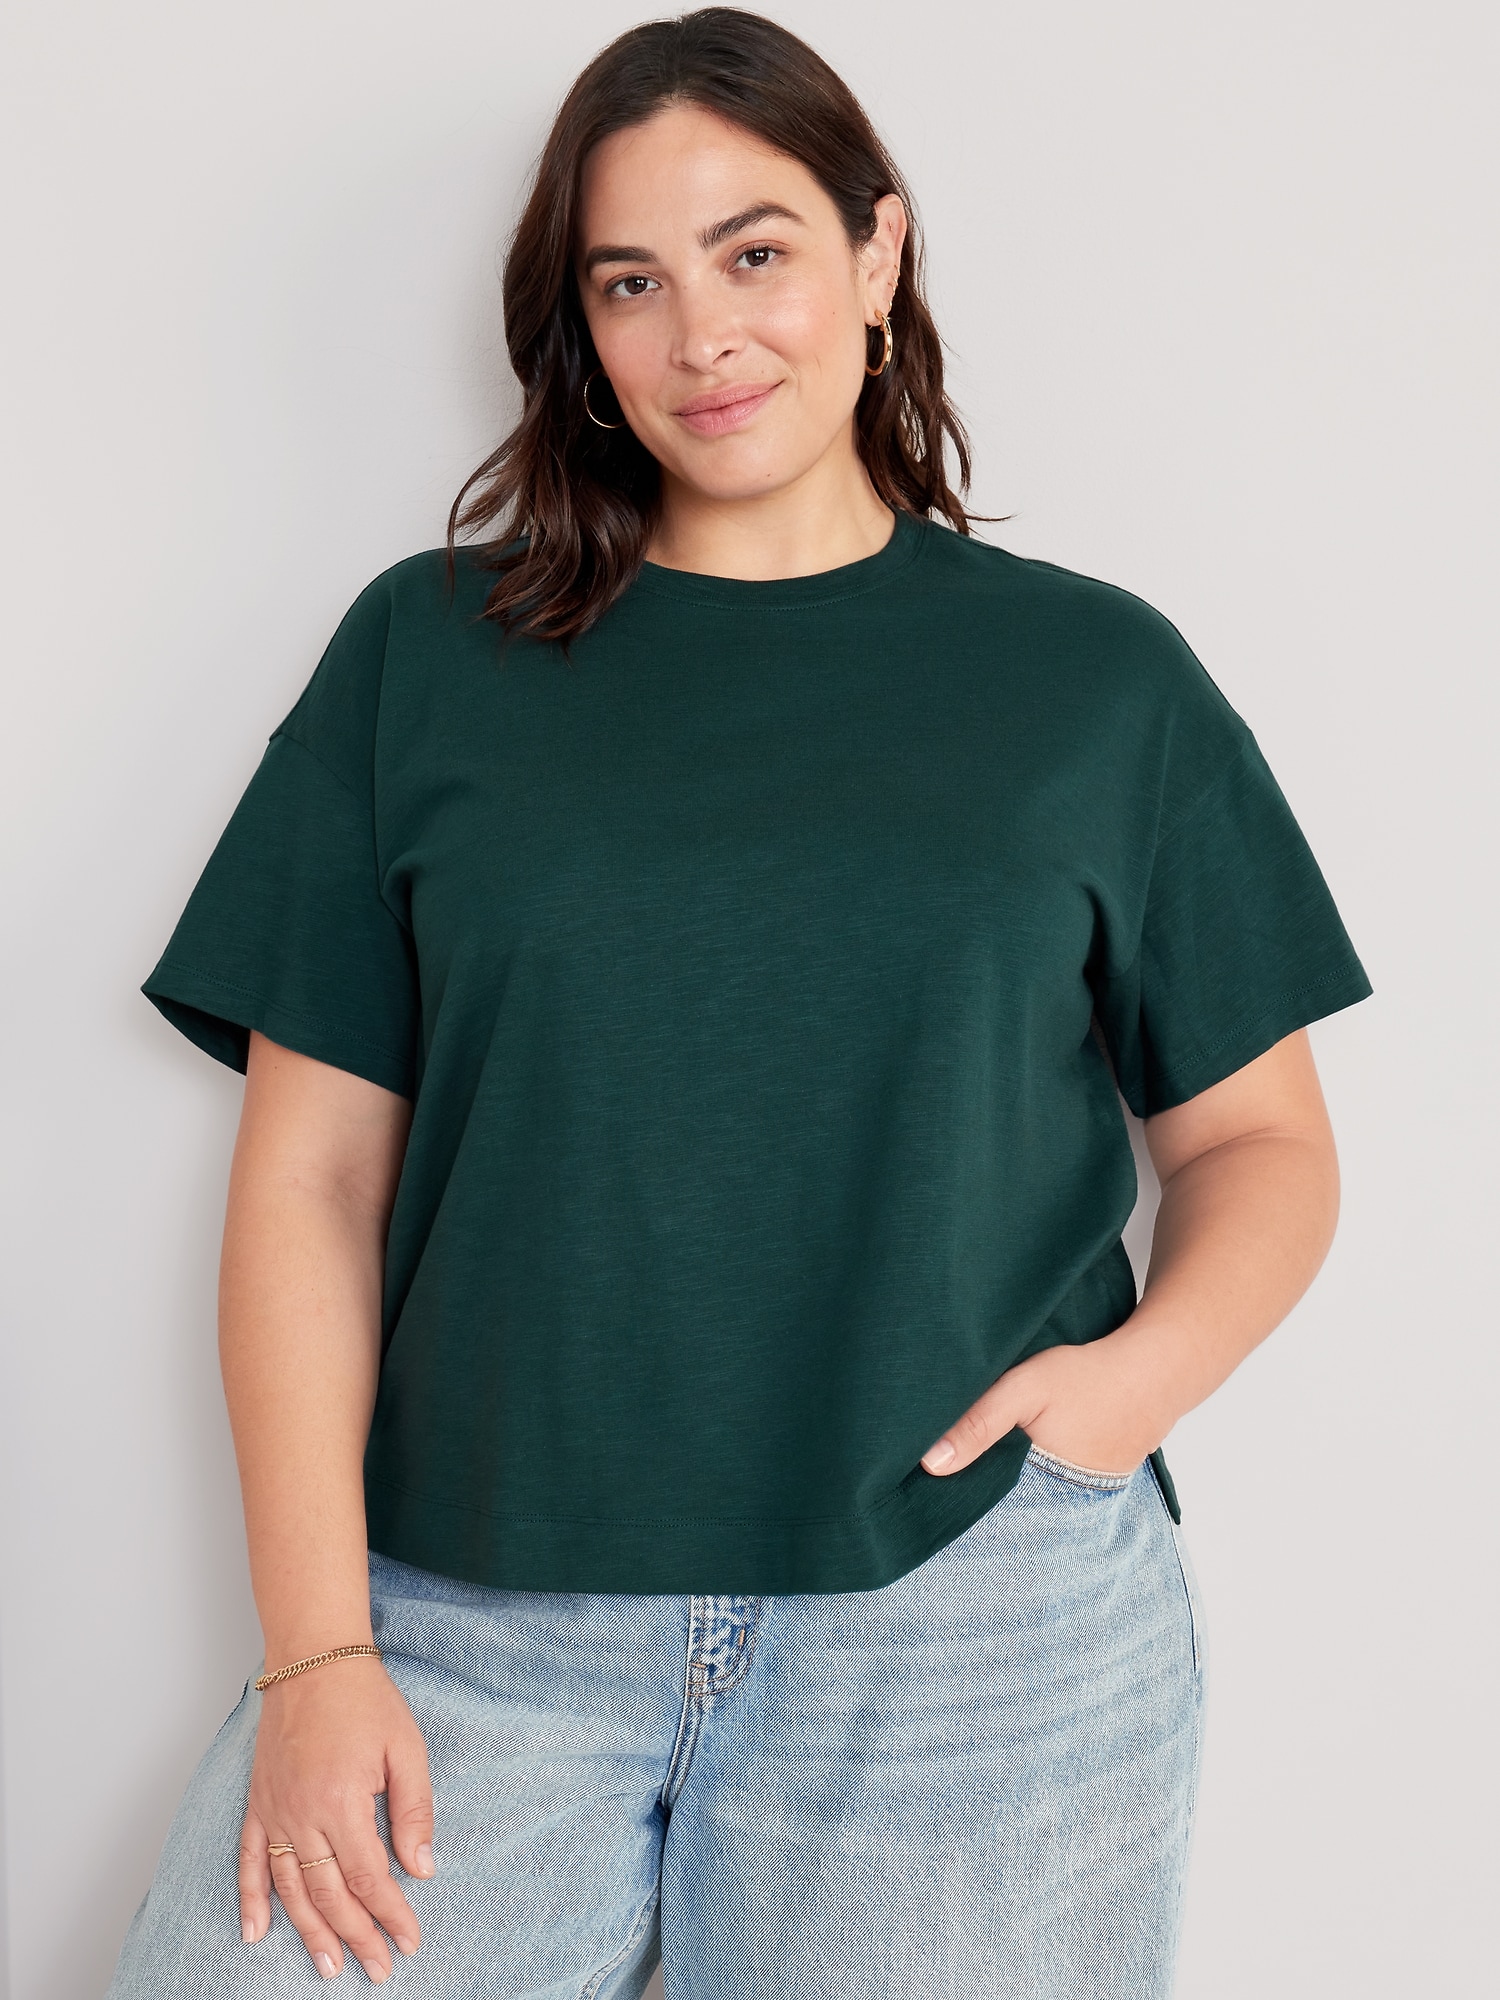 Vintage Slub-Knit T-Shirt for Women | Old Navy